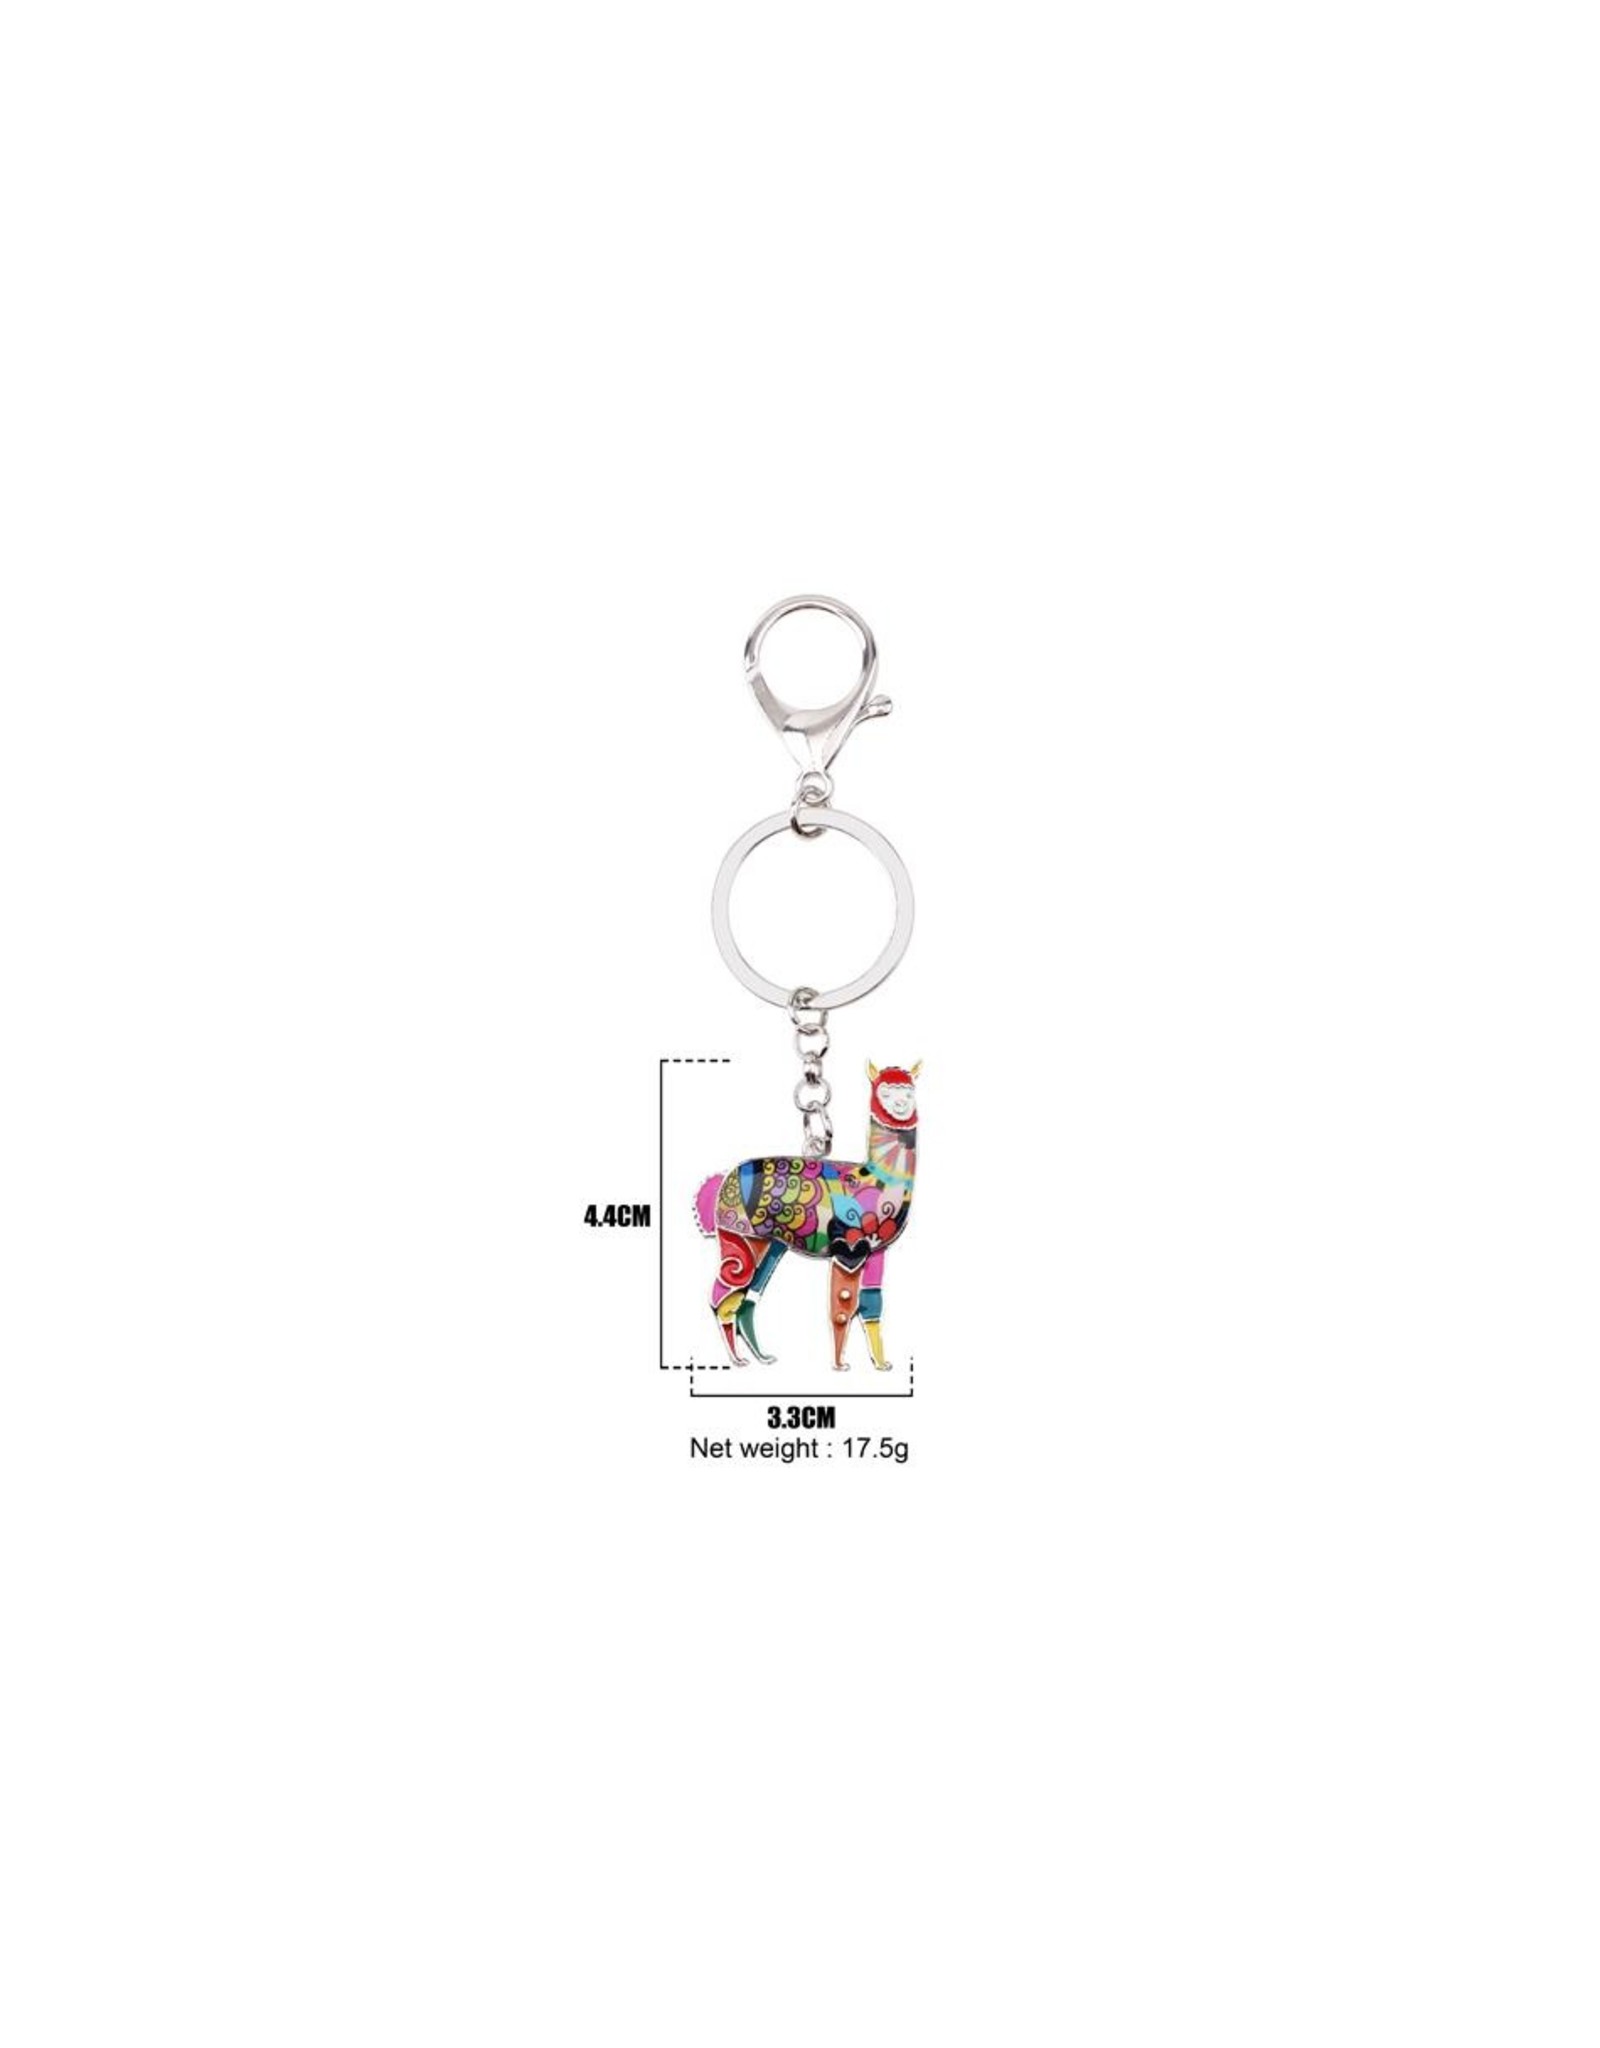 Alpaca Keychain Charm - Colorful Alpaca